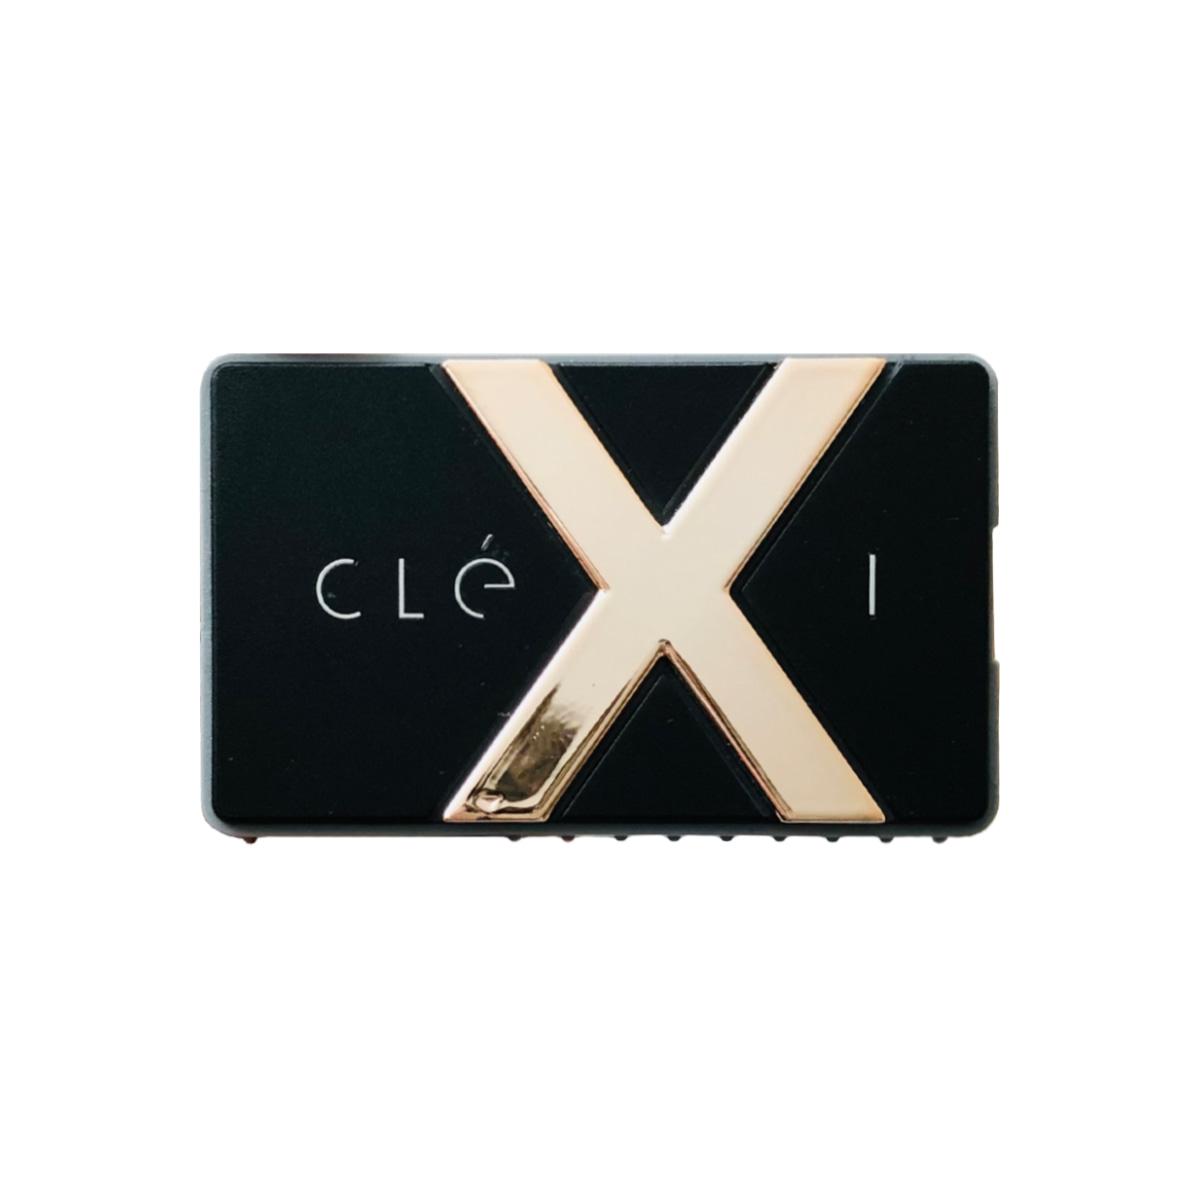 clexi-1TB-001